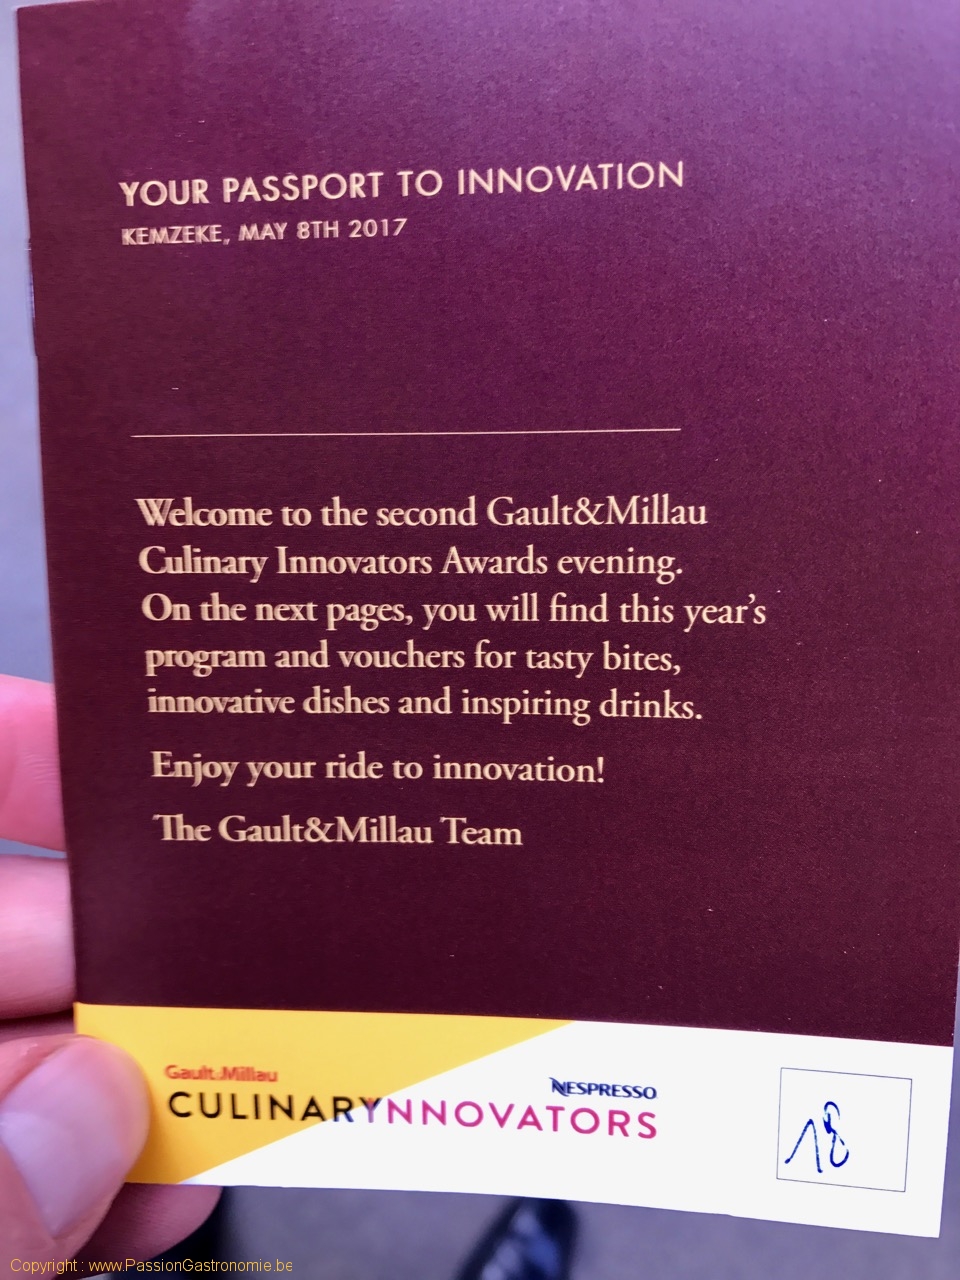 Gault Millau Culinary Innovators - Passeport à l'innovation